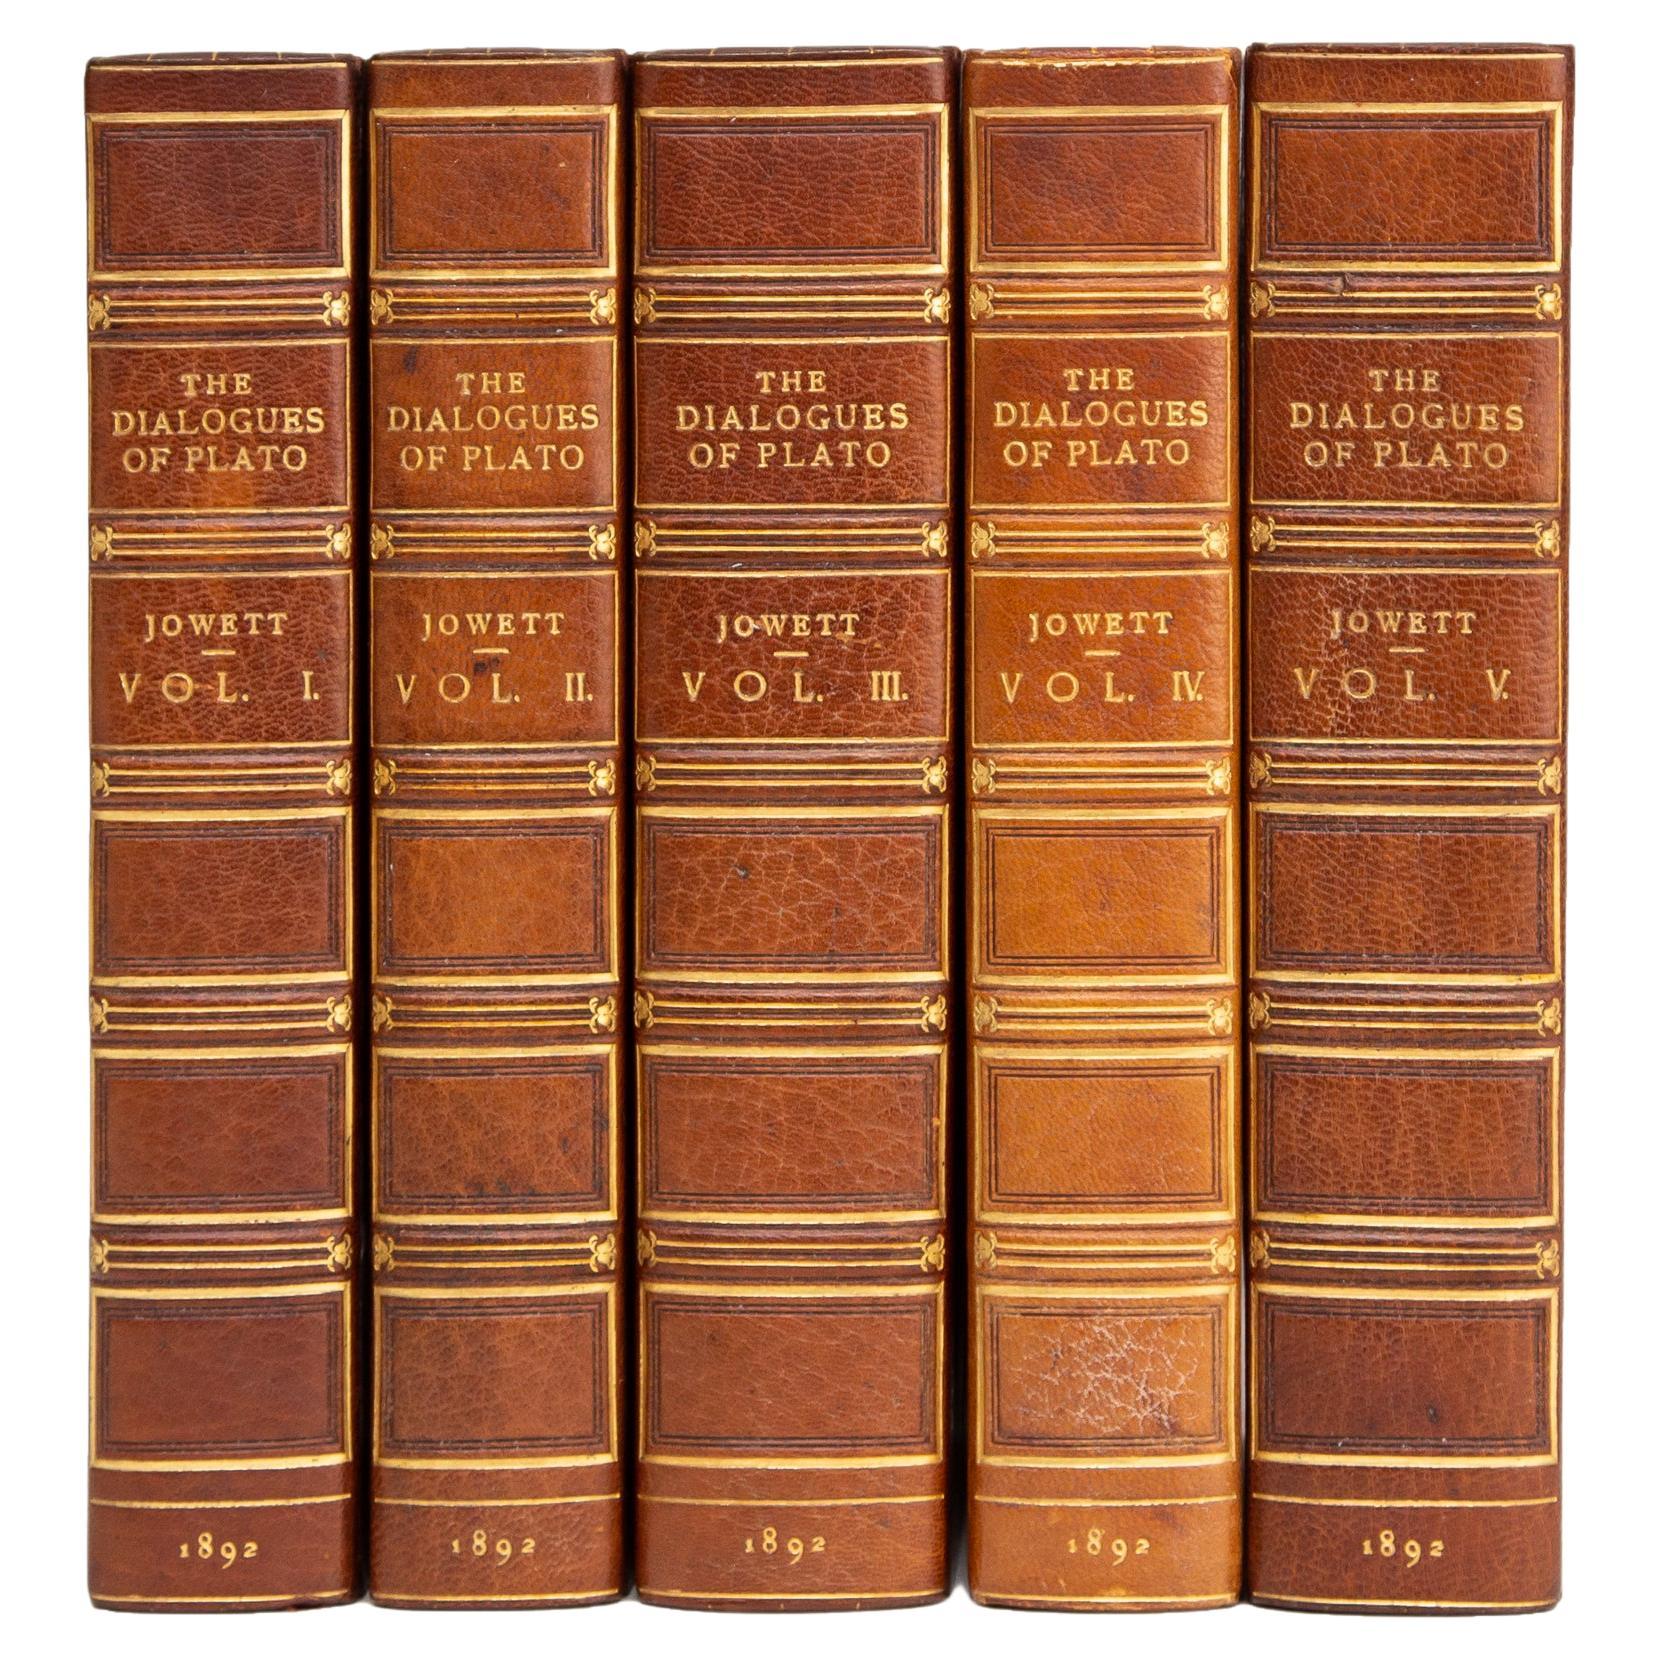 5 Volumes. Plato & B. Jowett, The Dialogues of Plato.